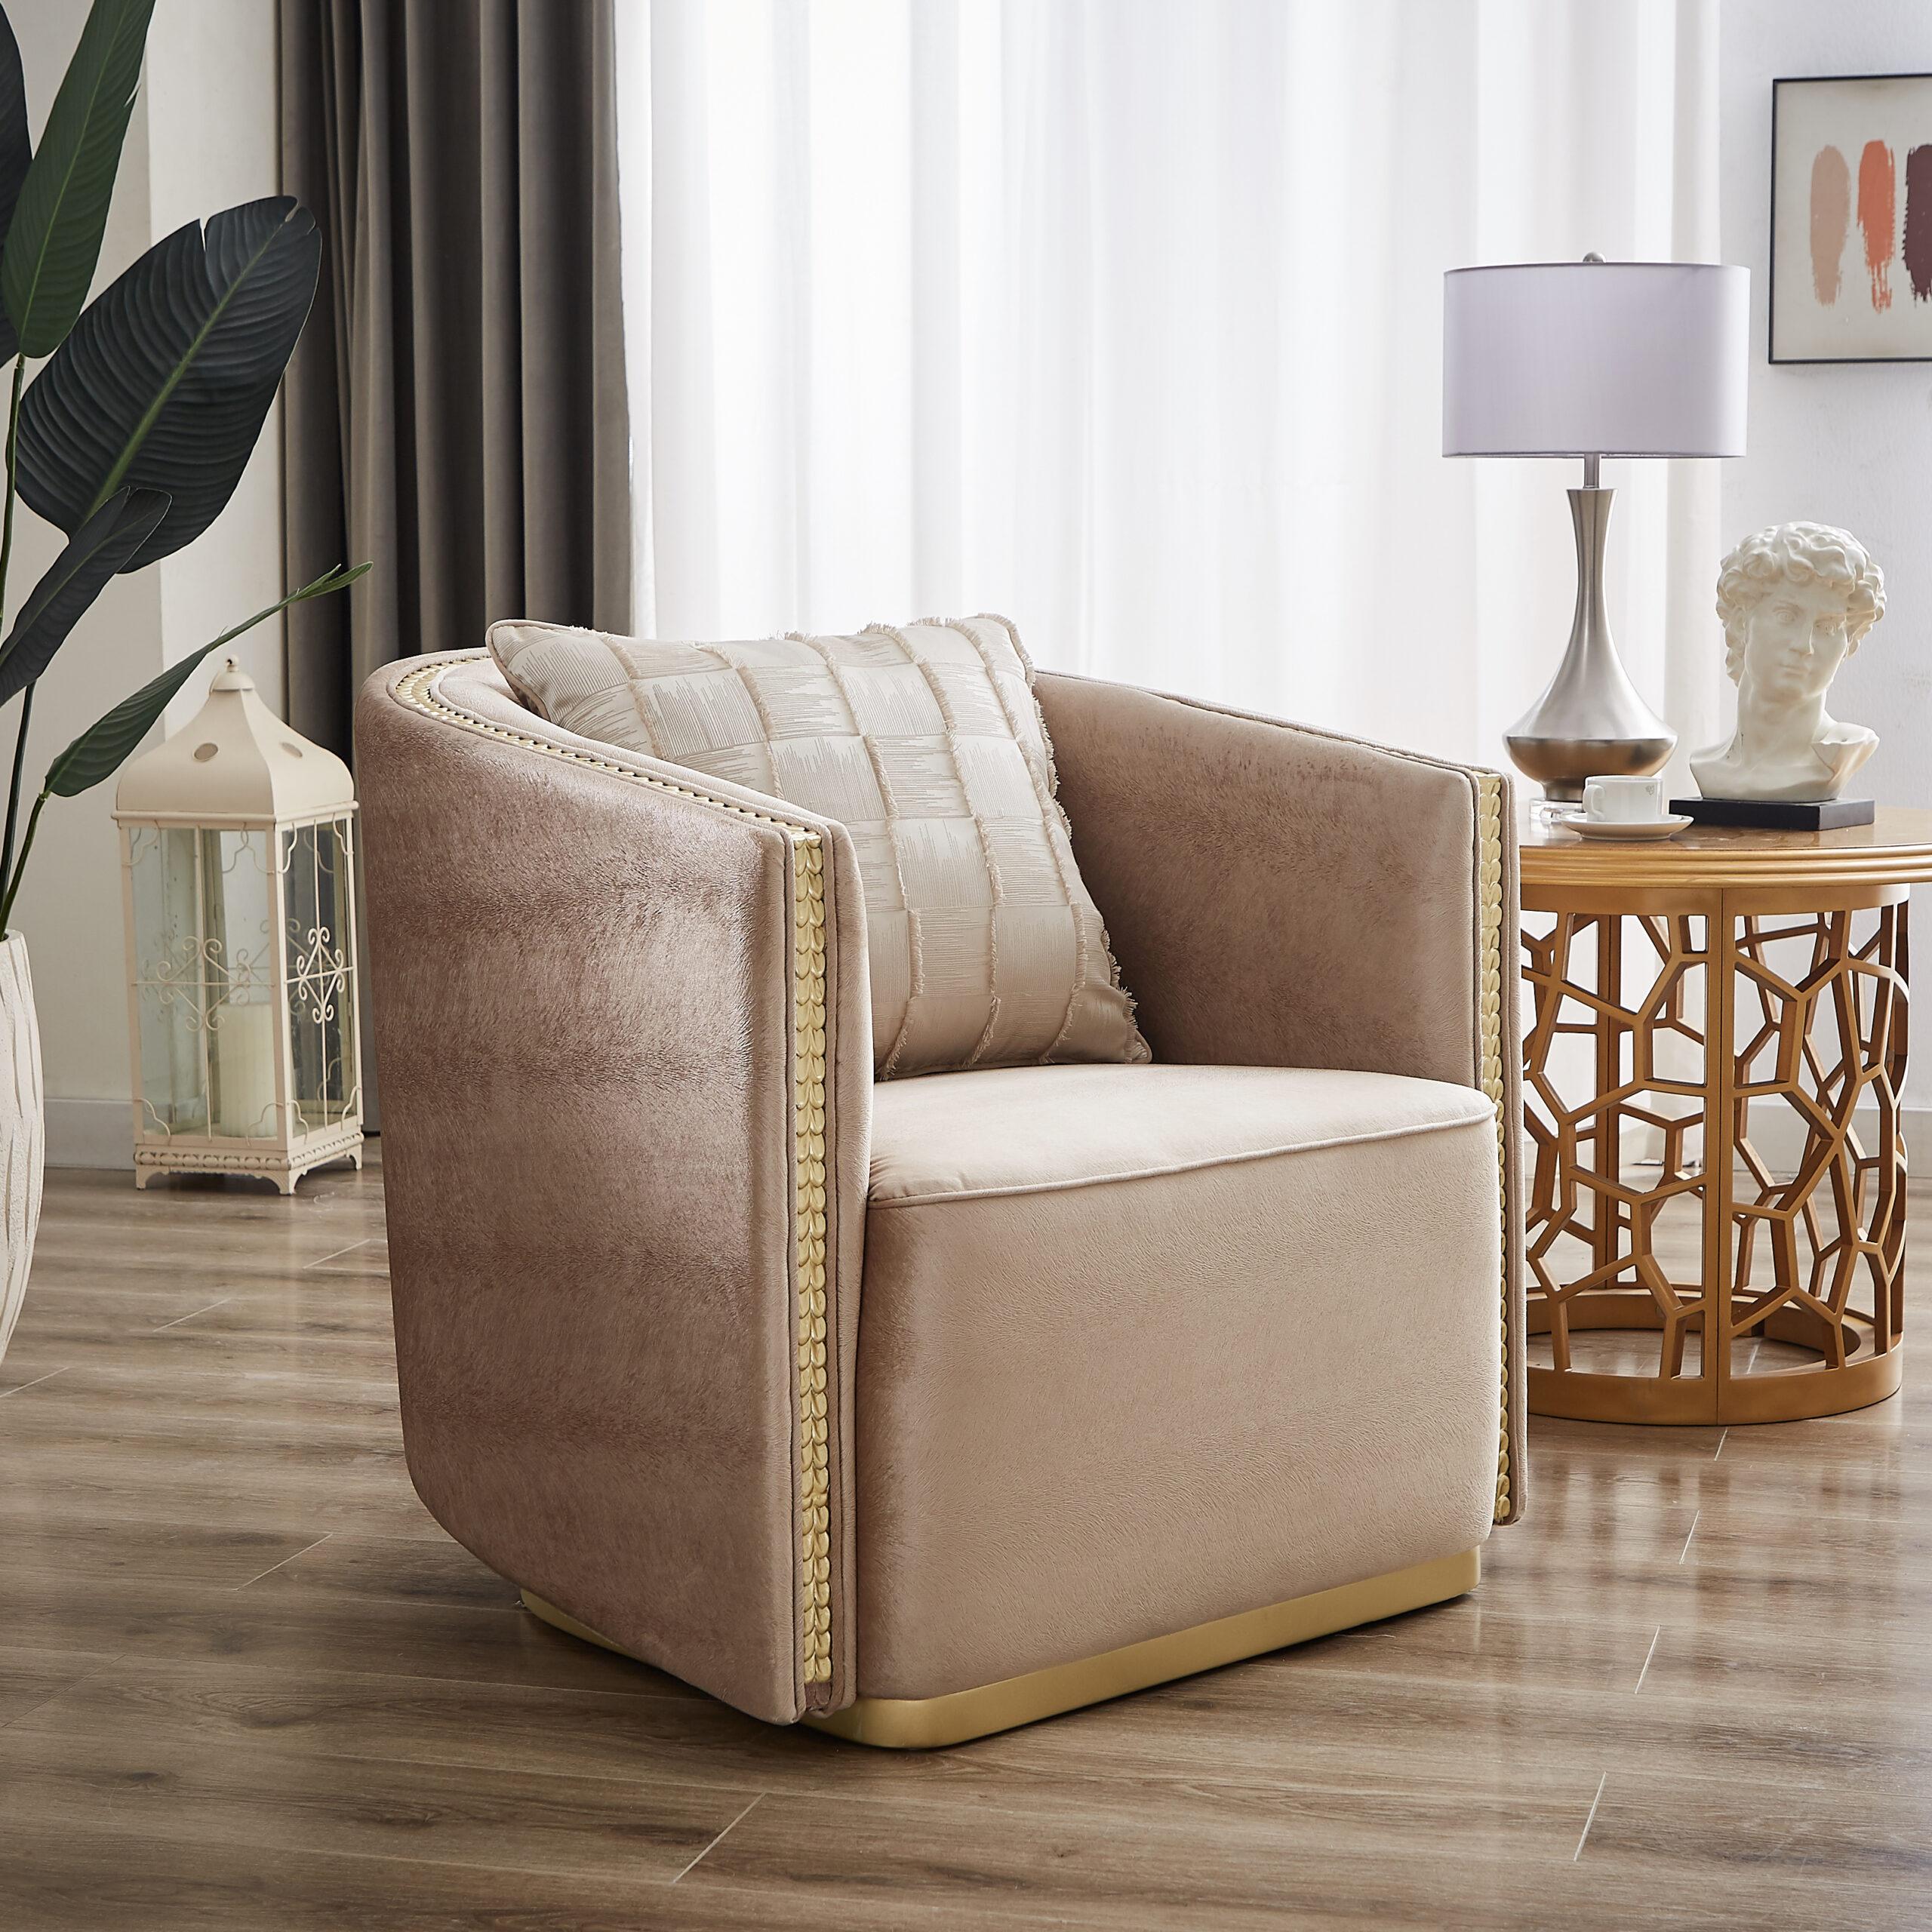 

    
Homey Design Furniture HD-9040 Living Room Set 3PCS HD-3PC9040 Living Room Set Gold/Beige HD-3PC9040
